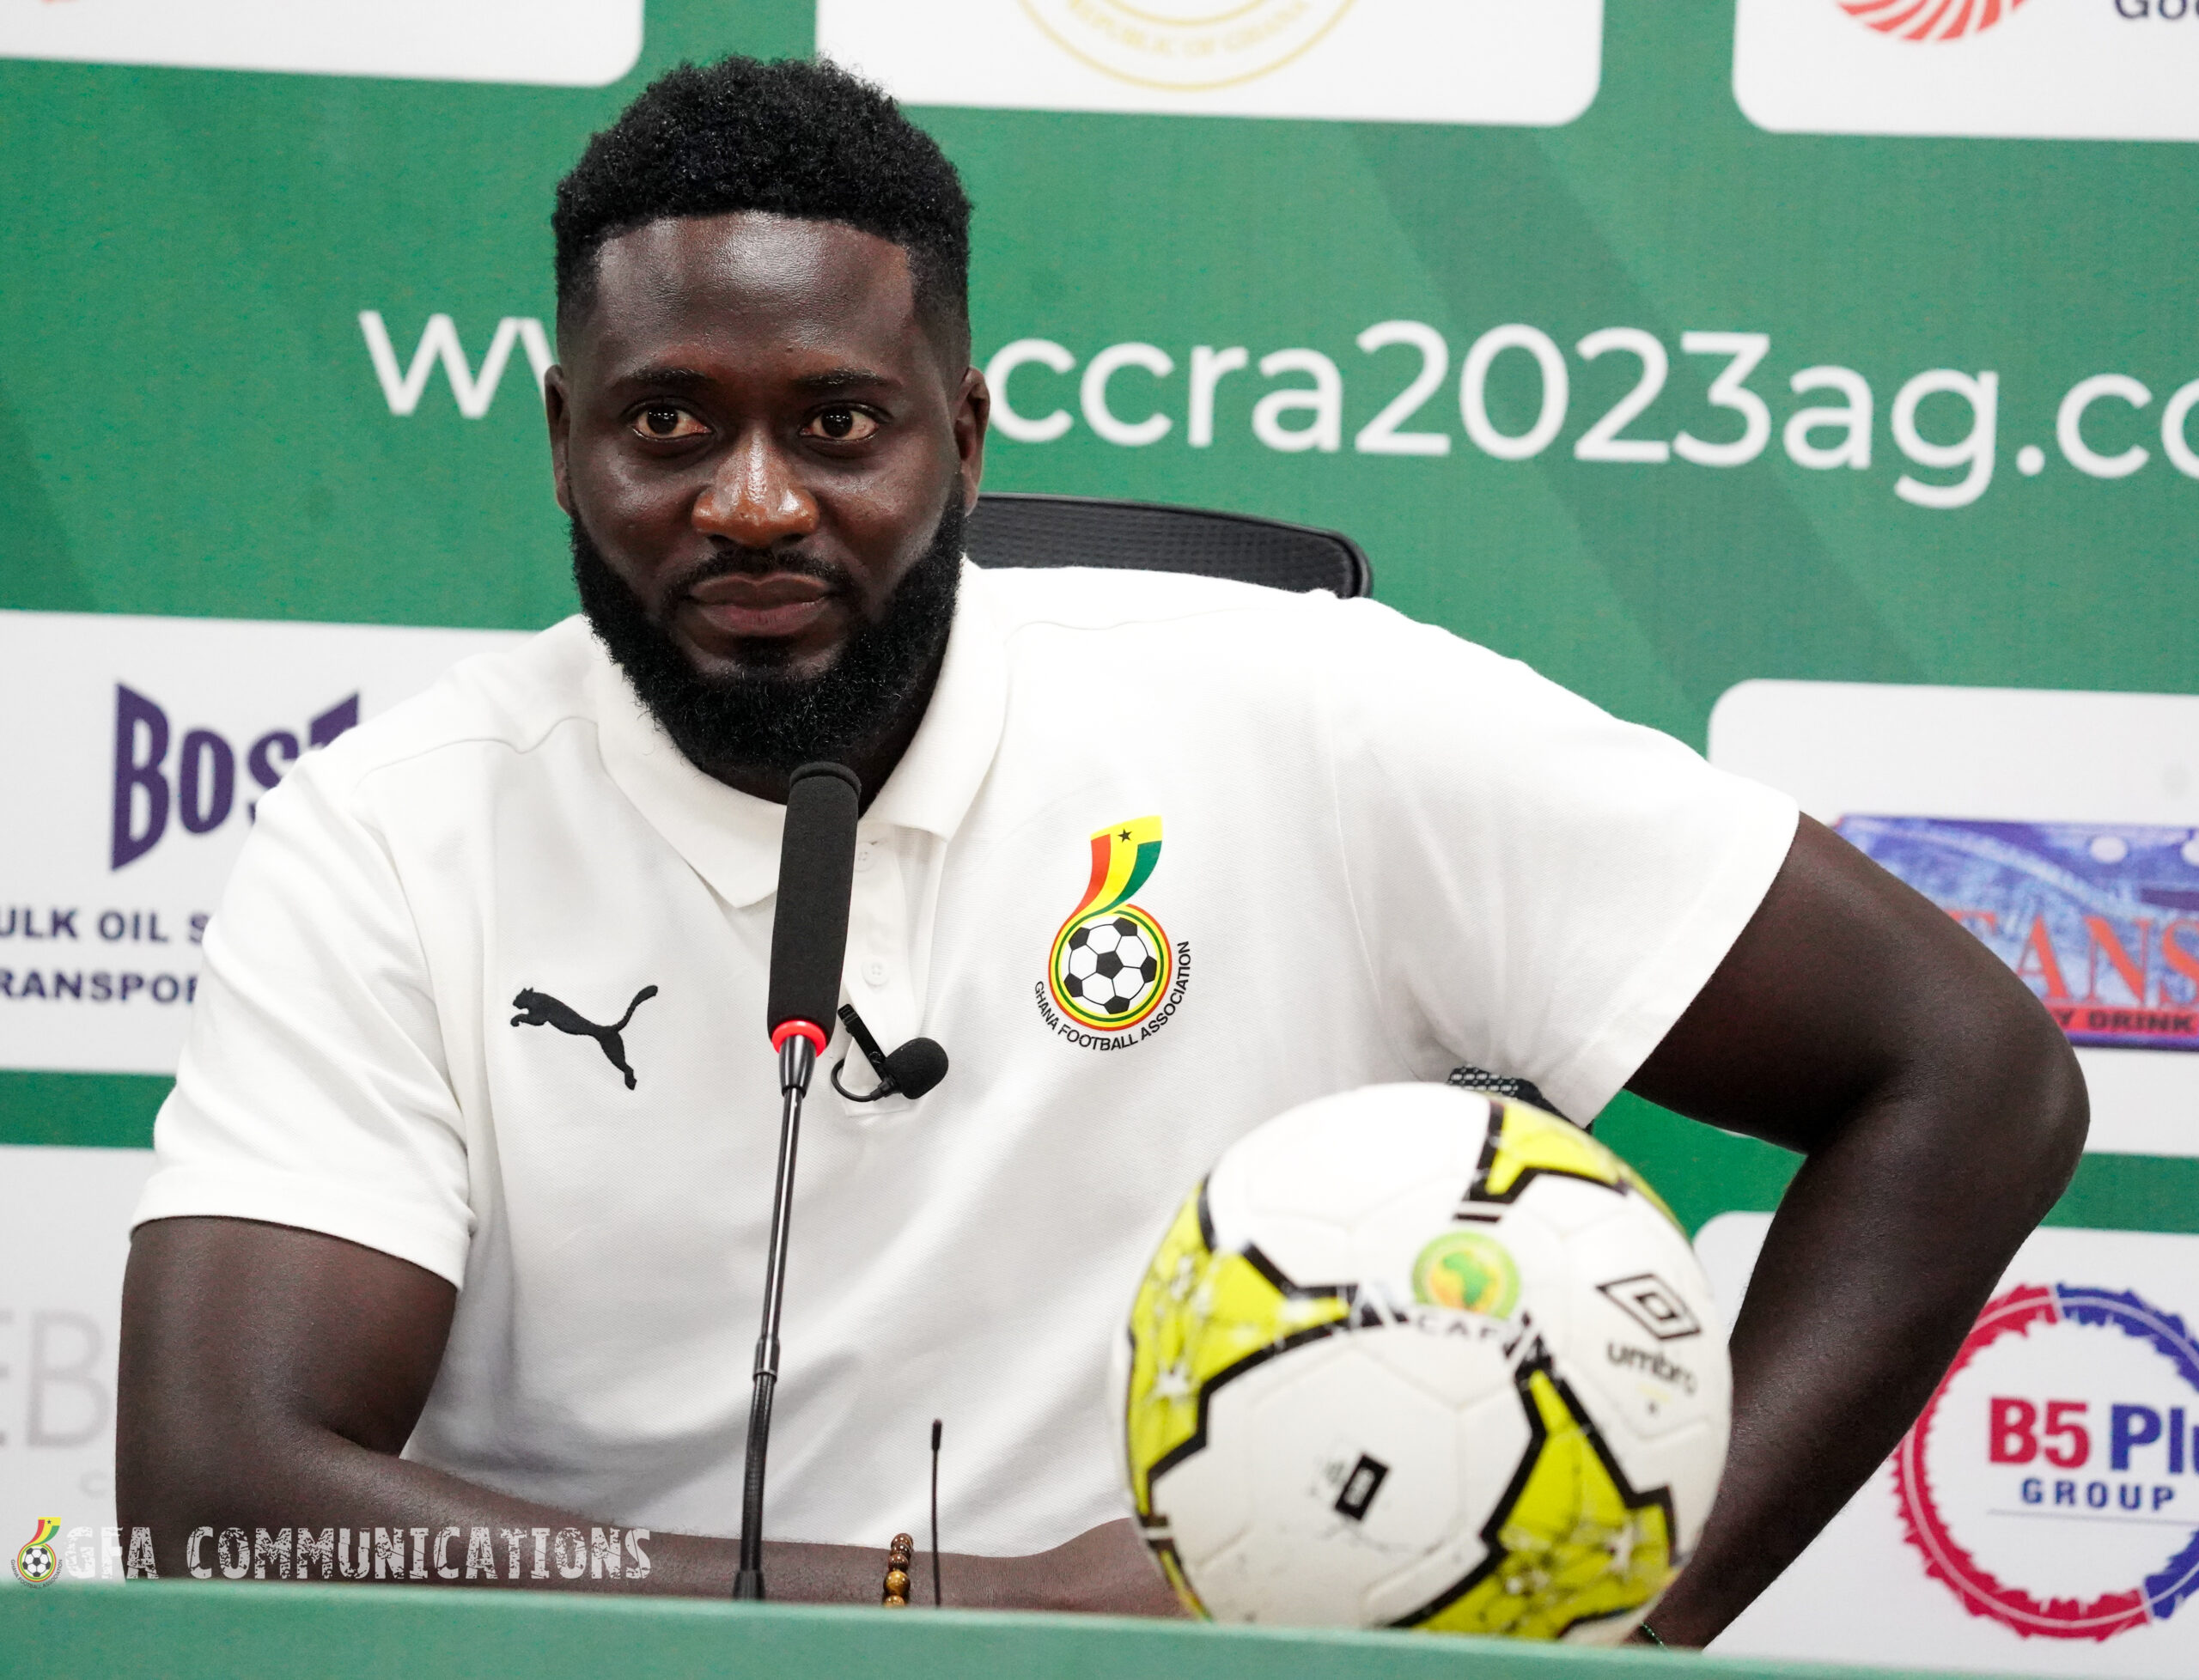 2023 African Games: We’ll lift the image of Ghana high - Ghana U20 coach Desmond Ofei